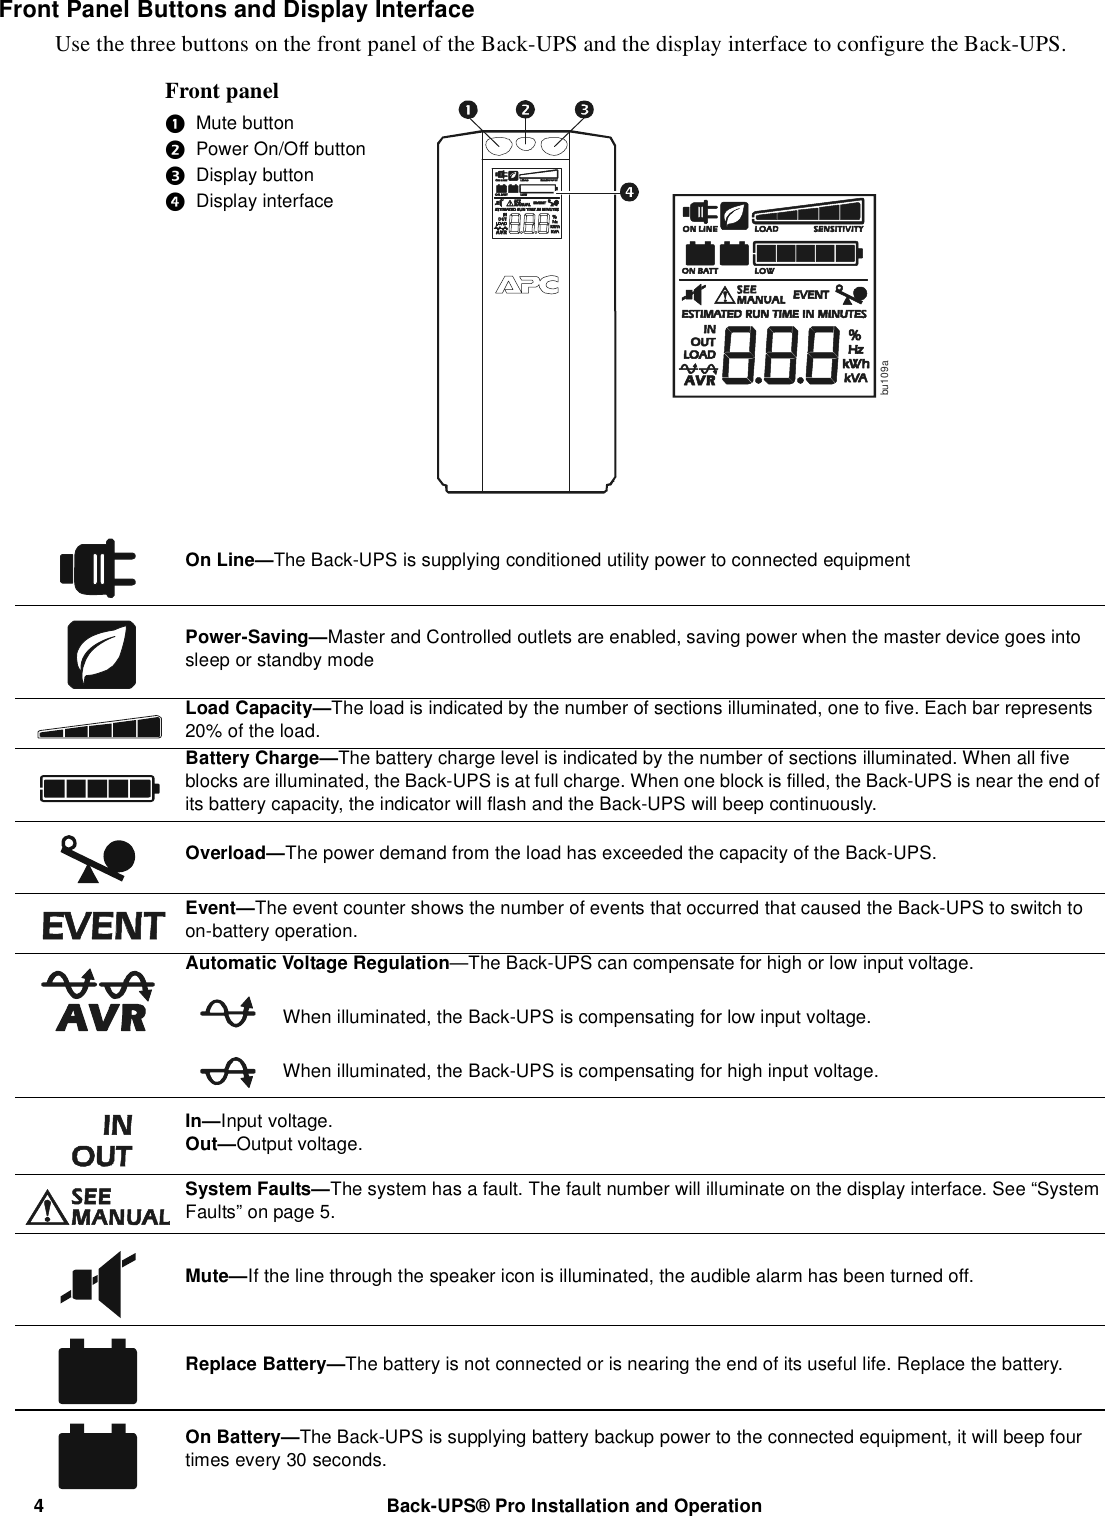 Page 4 of 8 - Apc Apc-Back-Ups-Pro-1300-Users-Manual- BU QS 990-3787 MN01 EN  Apc-back-ups-pro-1300-users-manual